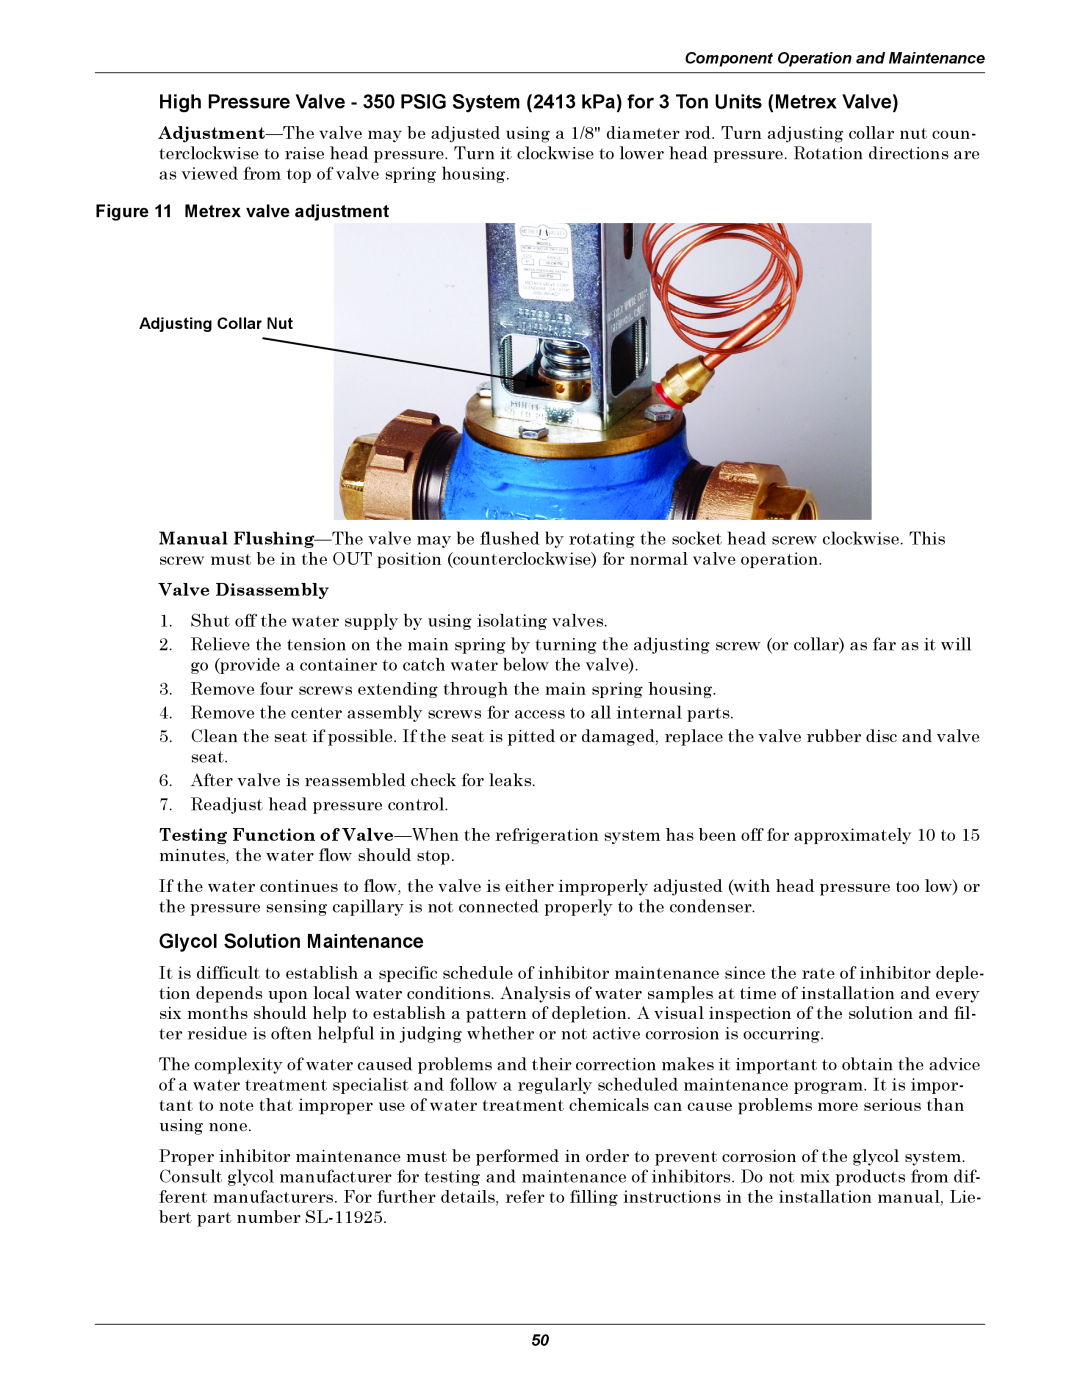 Liebert 3000 manual Glycol Solution Maintenance, Metrex valve adjustment 